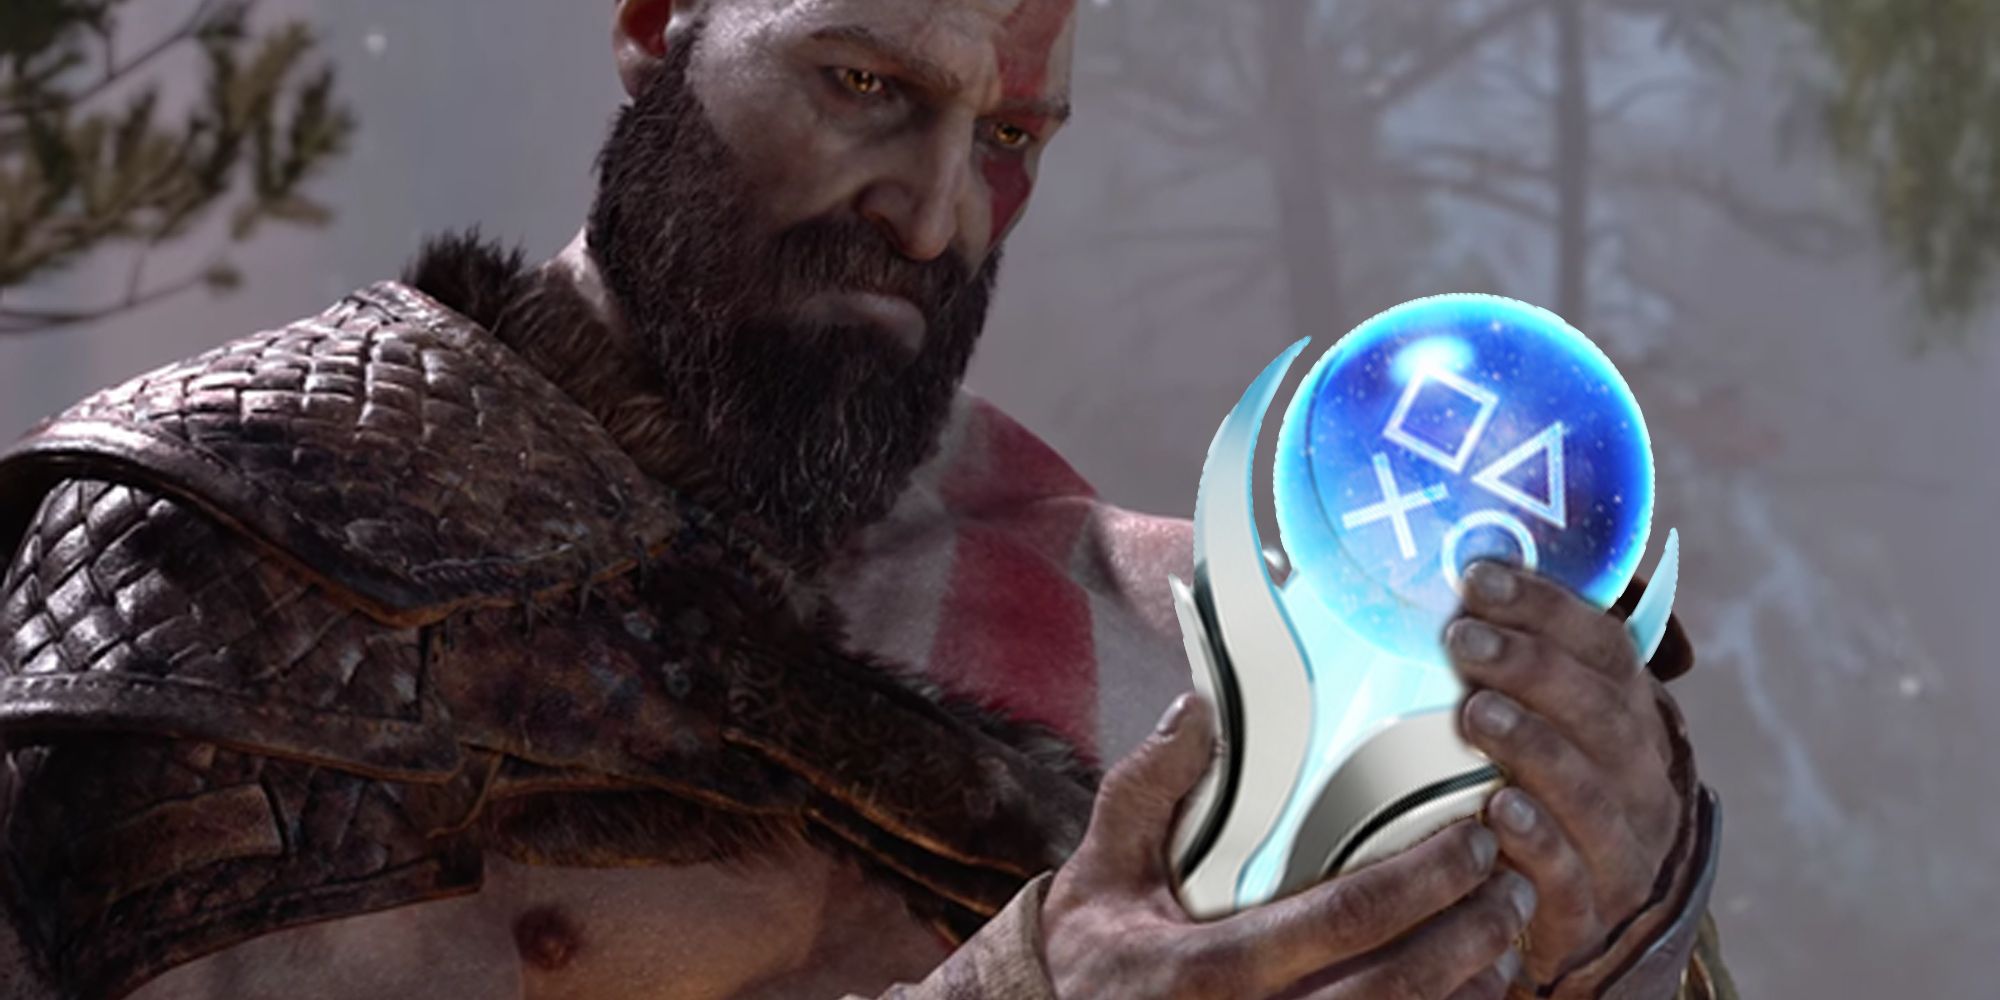 kratos holding a ps platinum trophy